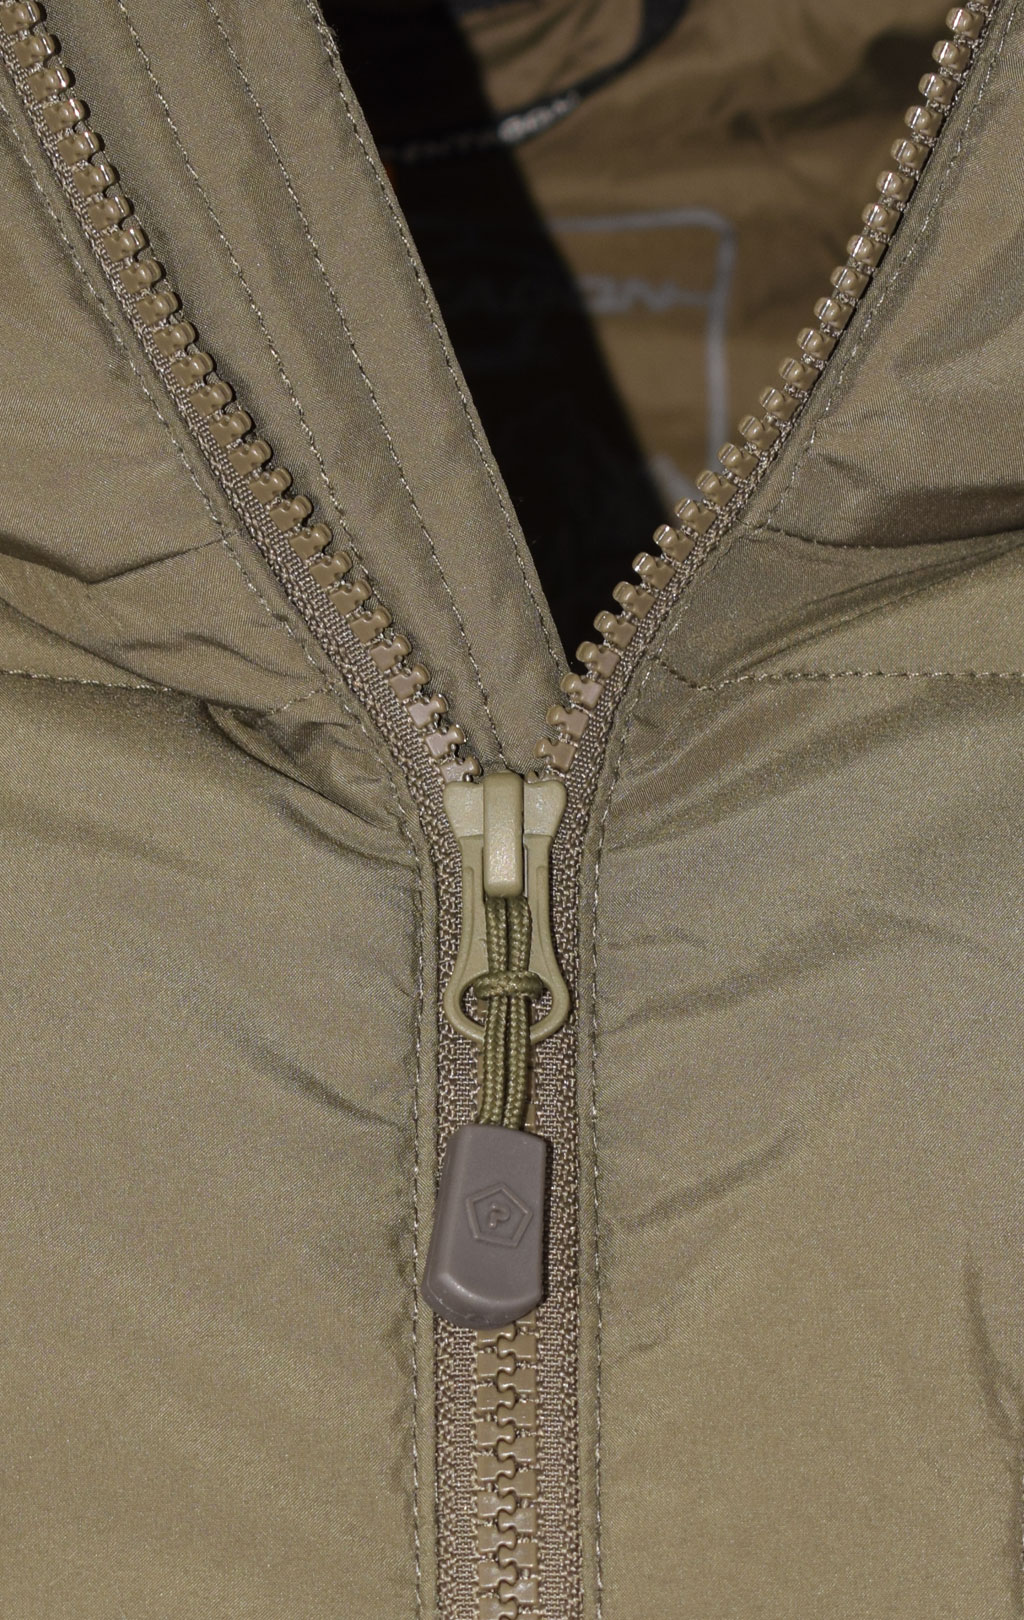 Куртка Pentagon TAURUS утеплённая с капюшоном 06E ral 7013 08050 